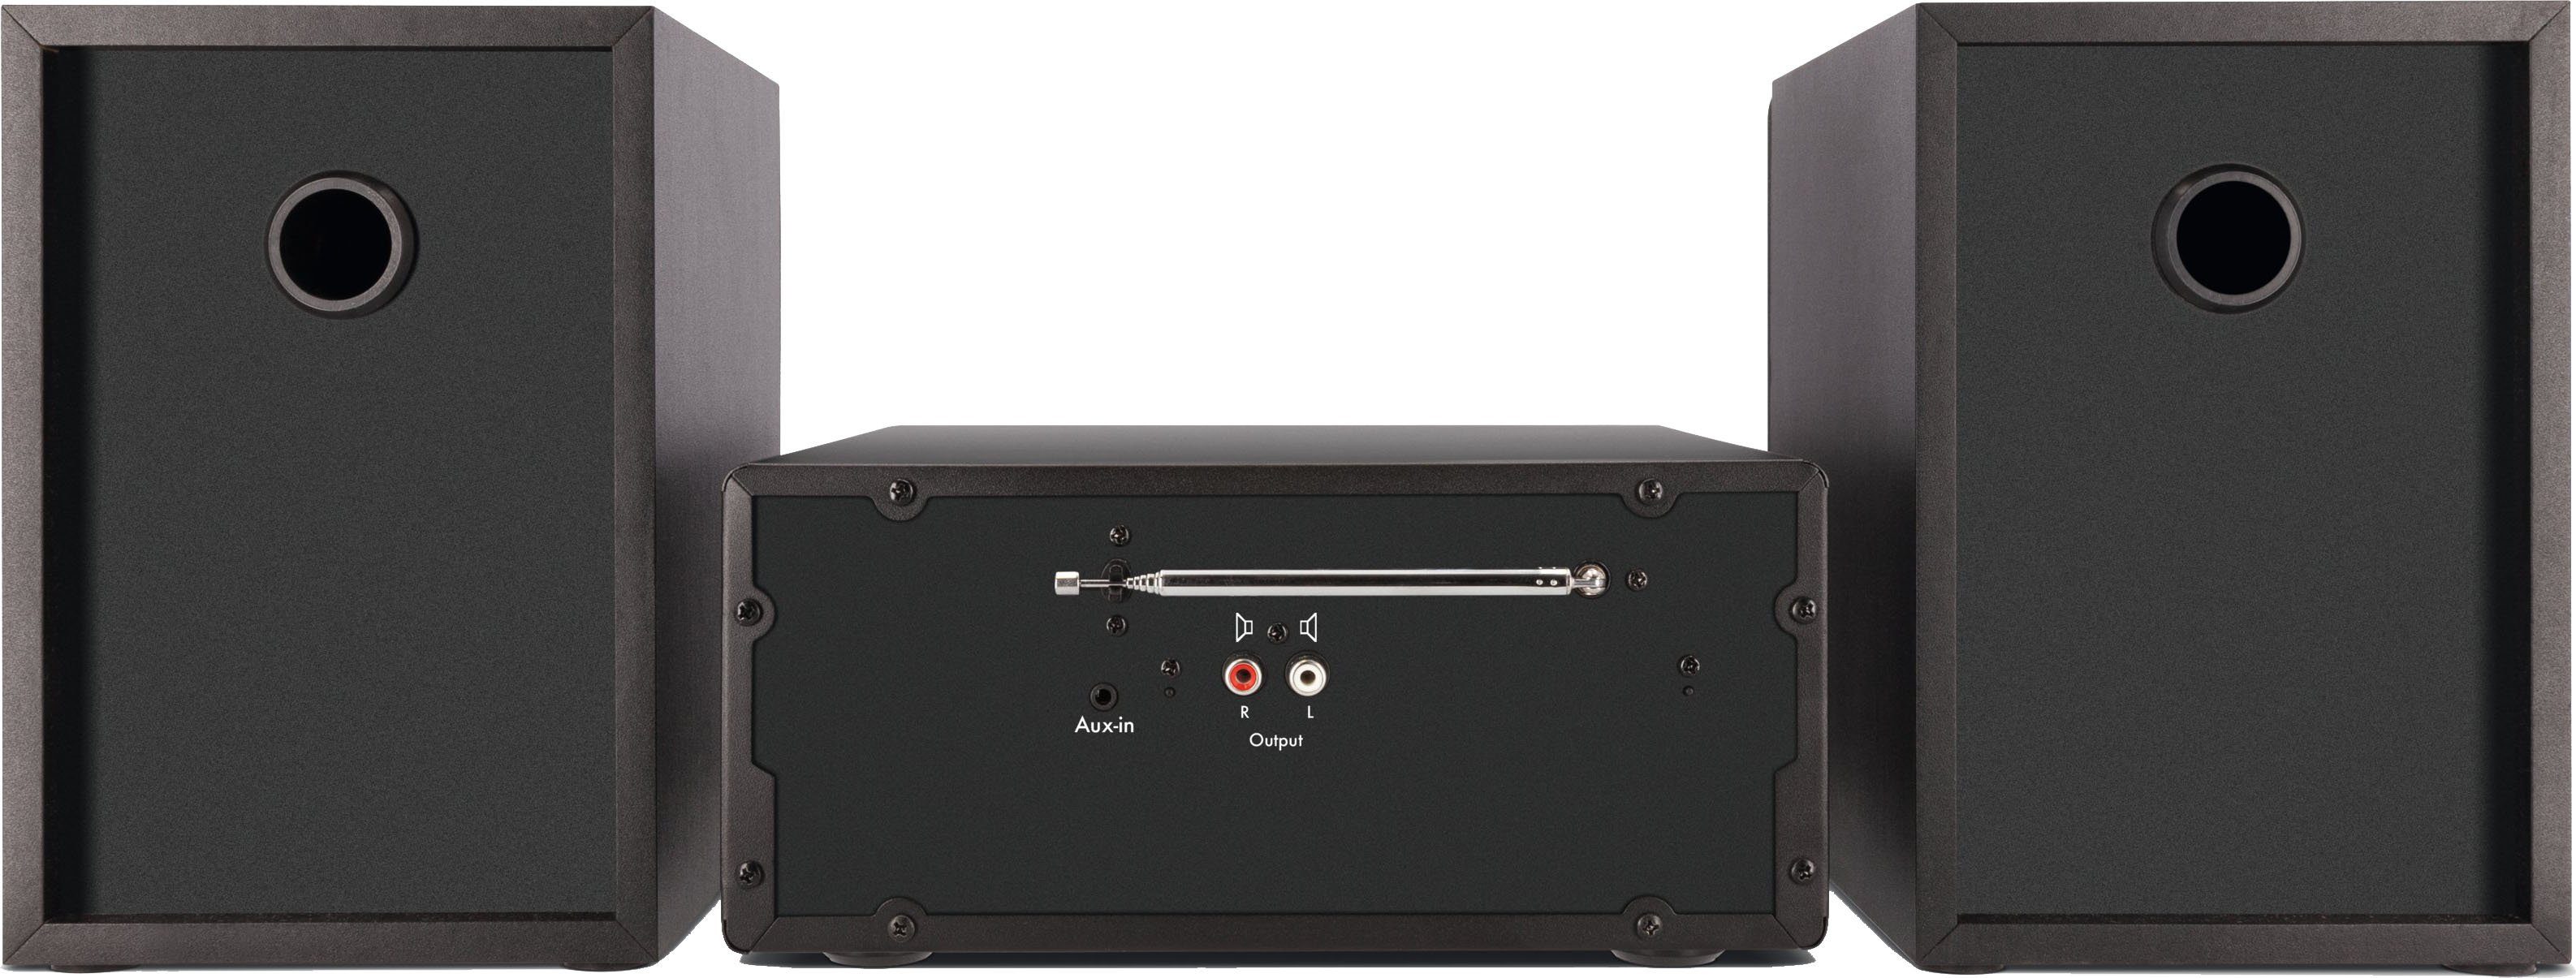 700 TechniSat W) 40 DIGITRADIO (DAB), (Digitalradio mit RDS, Internetradio, Stereo- UKW Microanlage